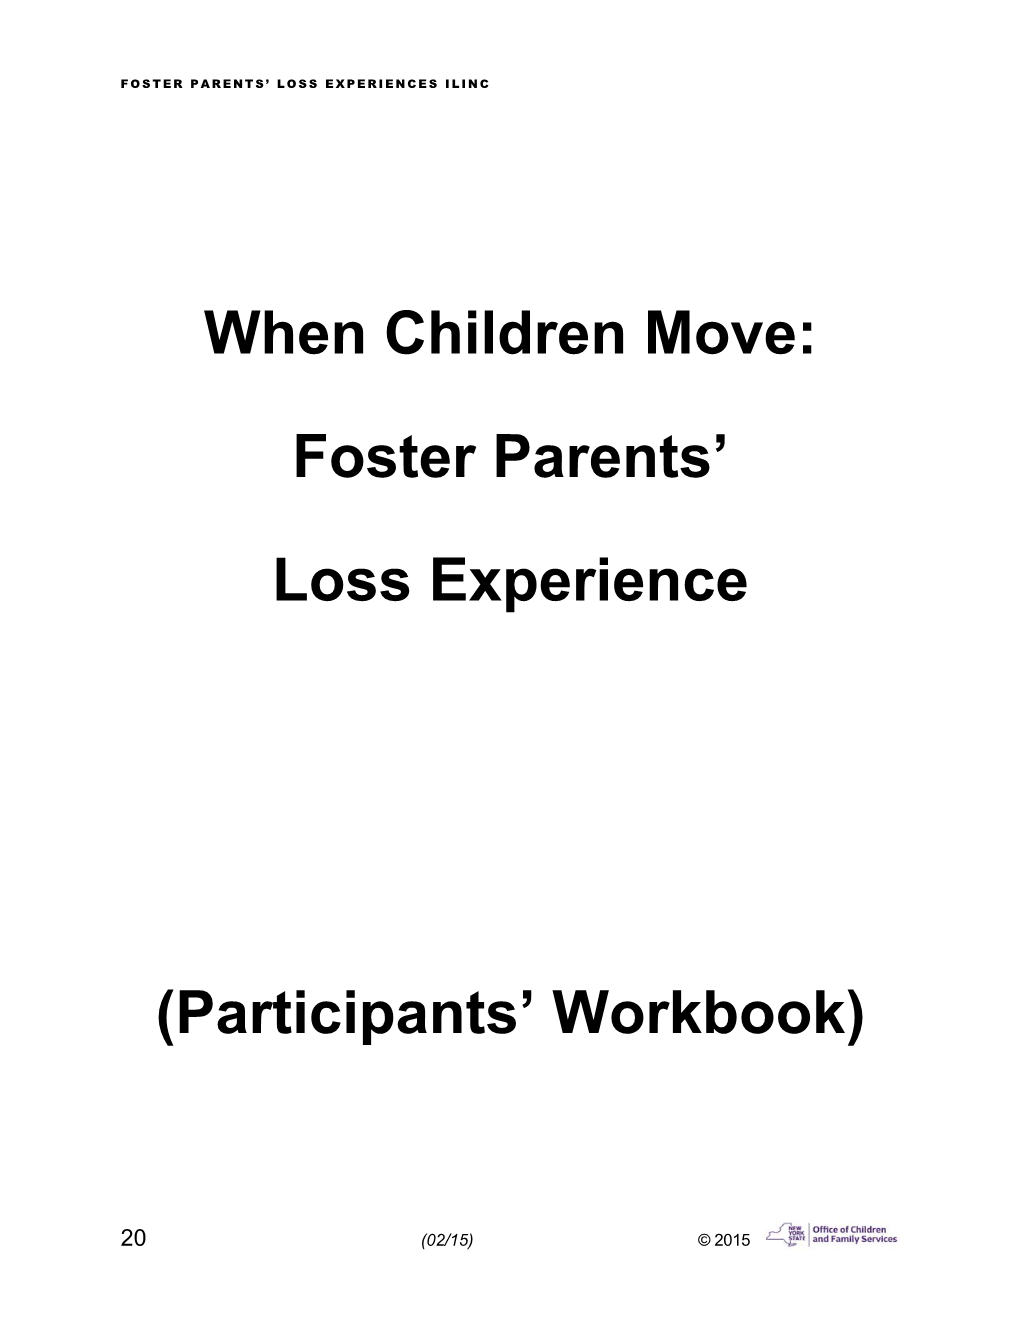 When Children Move: Foster Parents' Loss Experience (Participants